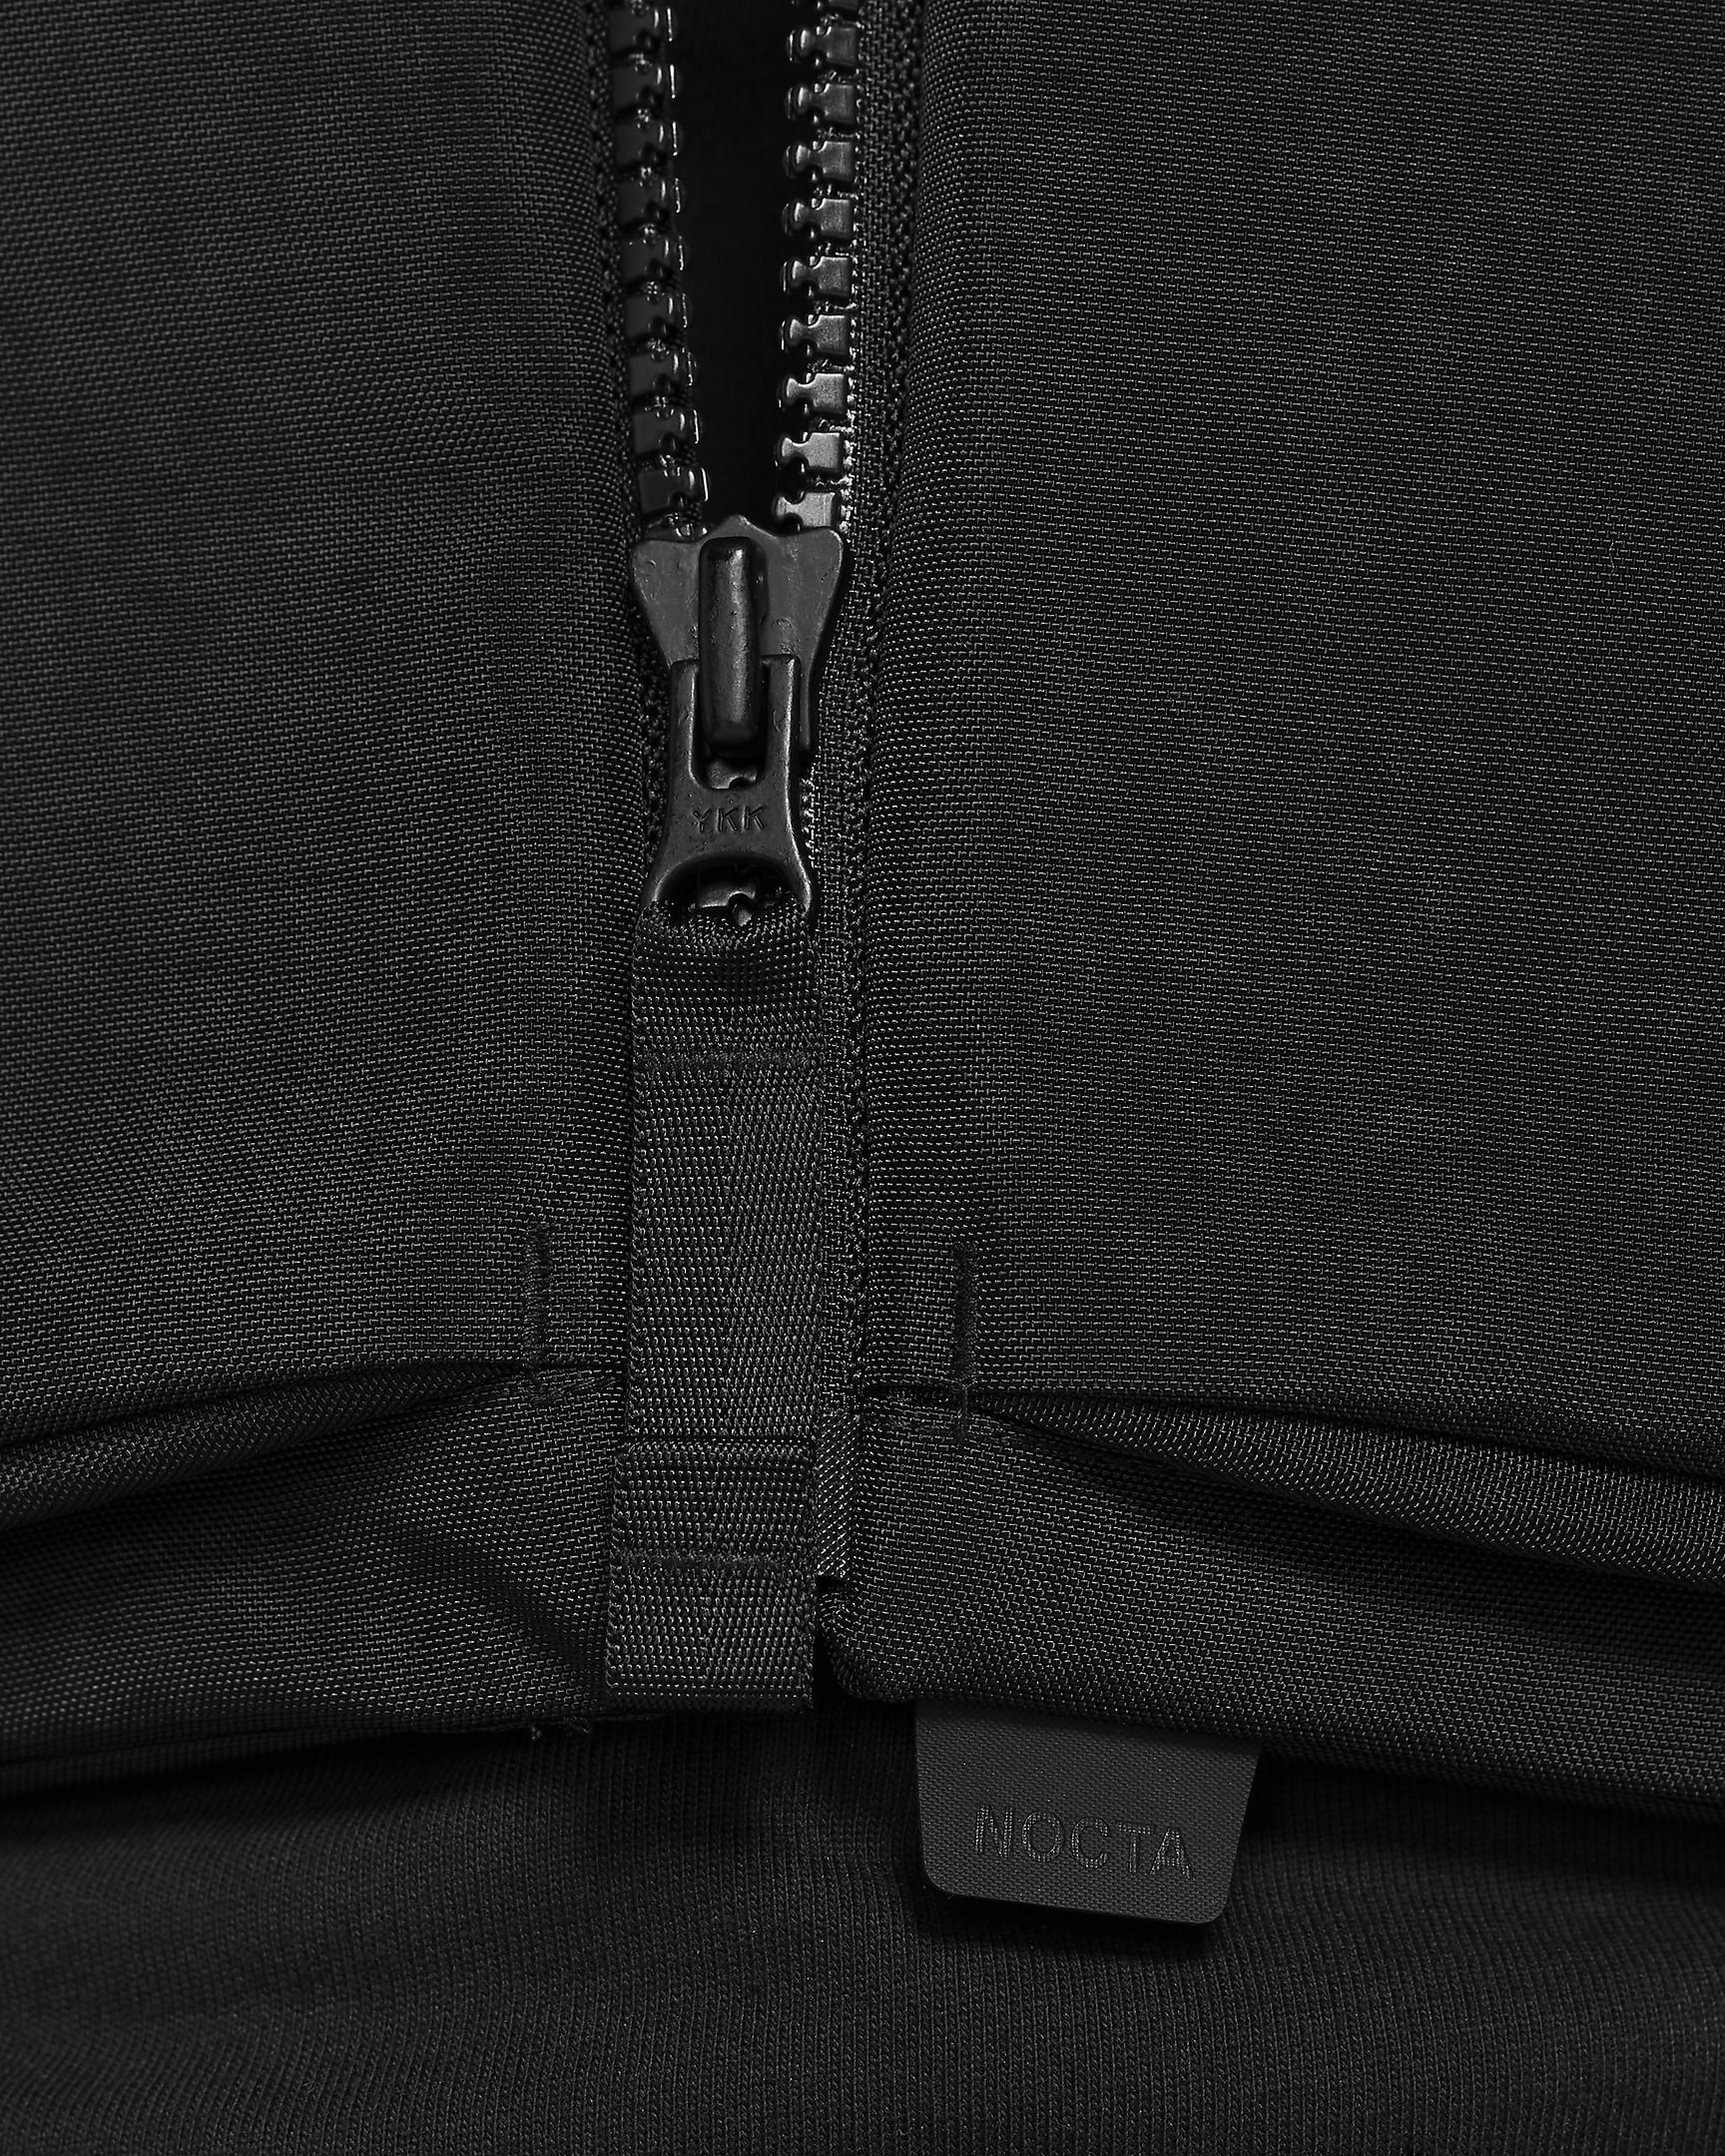 Nocta Tactical Vest DA3940-010 Detail